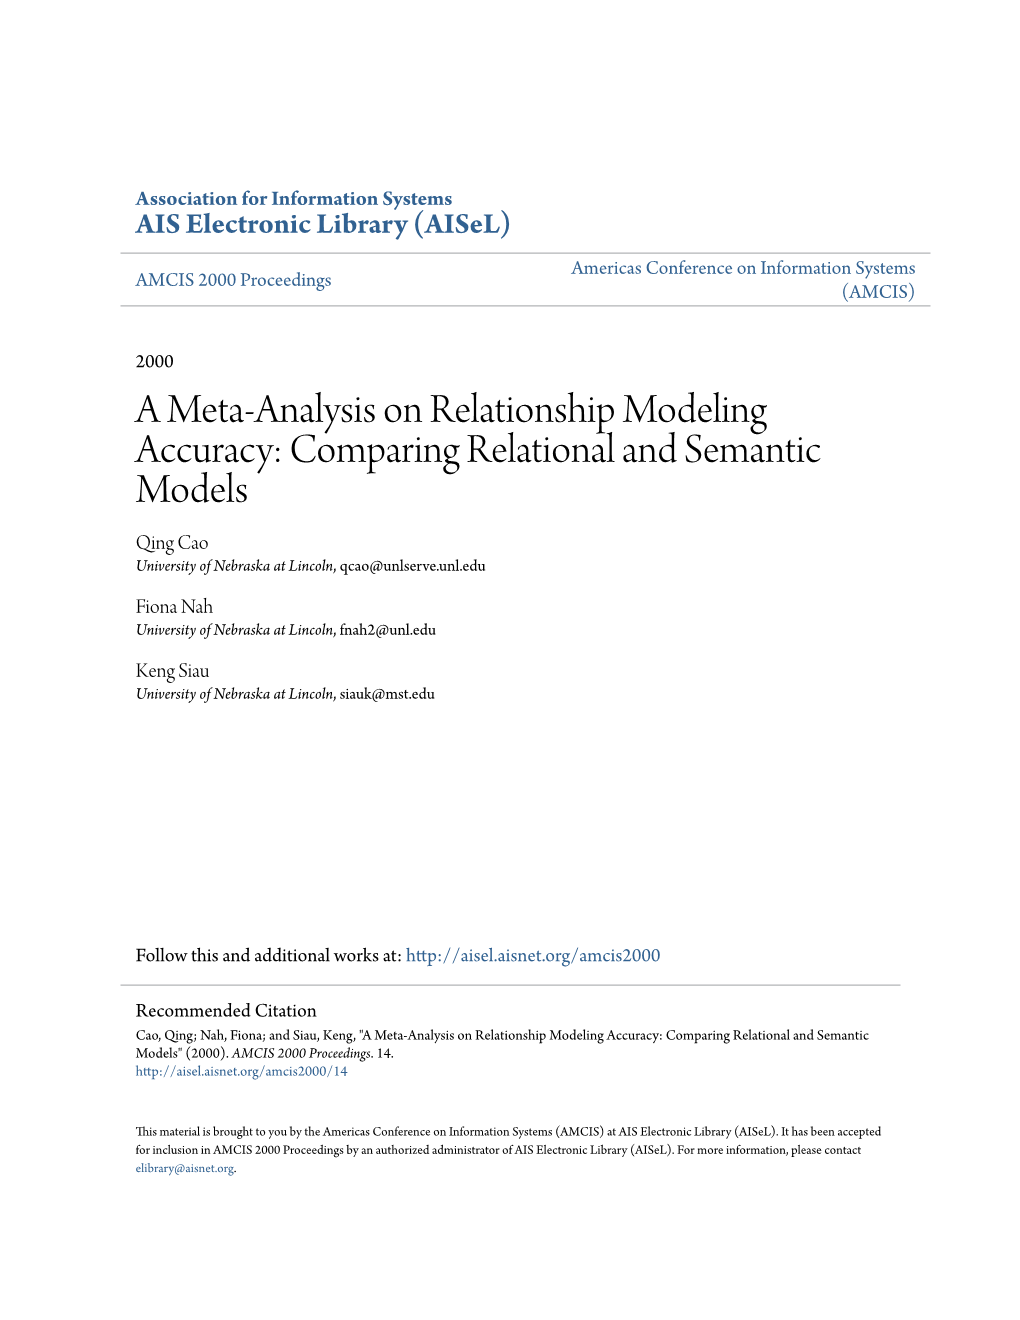 Comparing Relational and Semantic Models Qing Cao University of Nebraska at Lincoln, Qcao@Unlserve.Unl.Edu